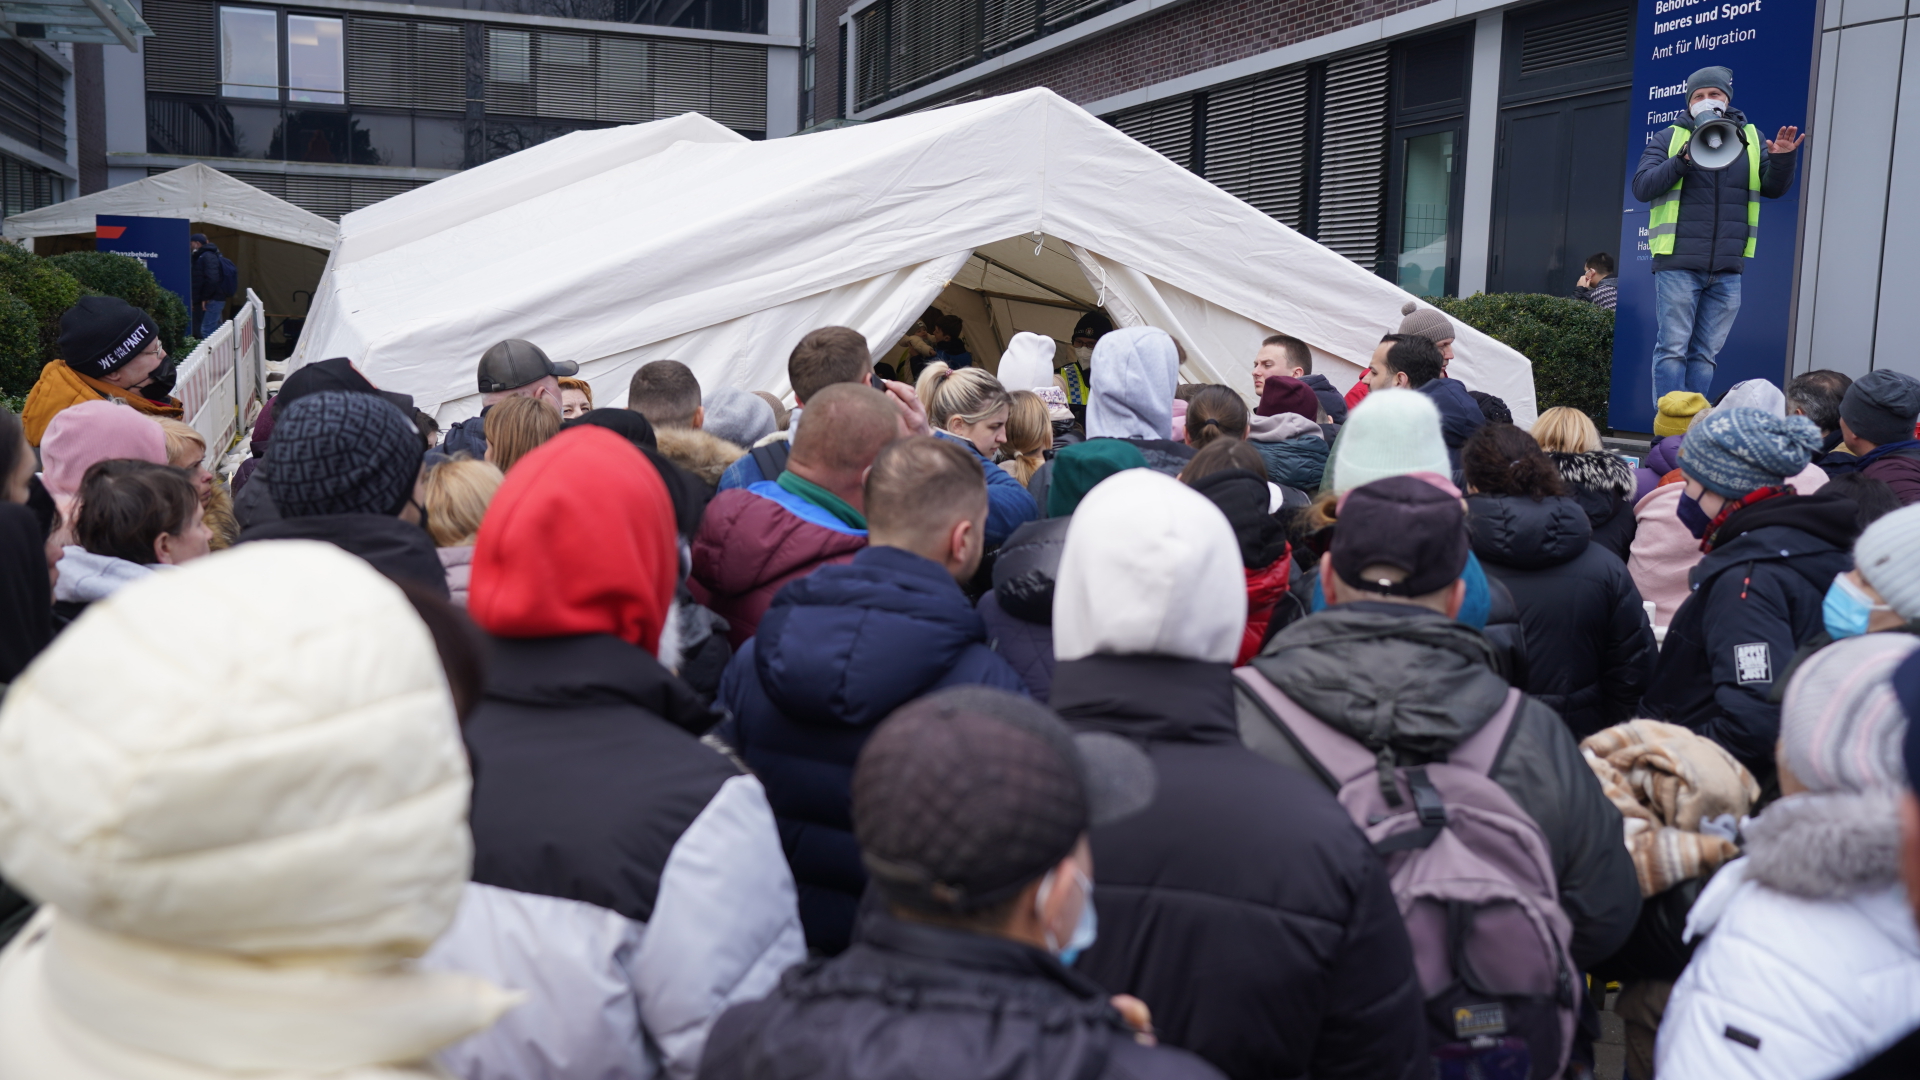 Ukrainische Flüchtlinge in Deutschland | dpa